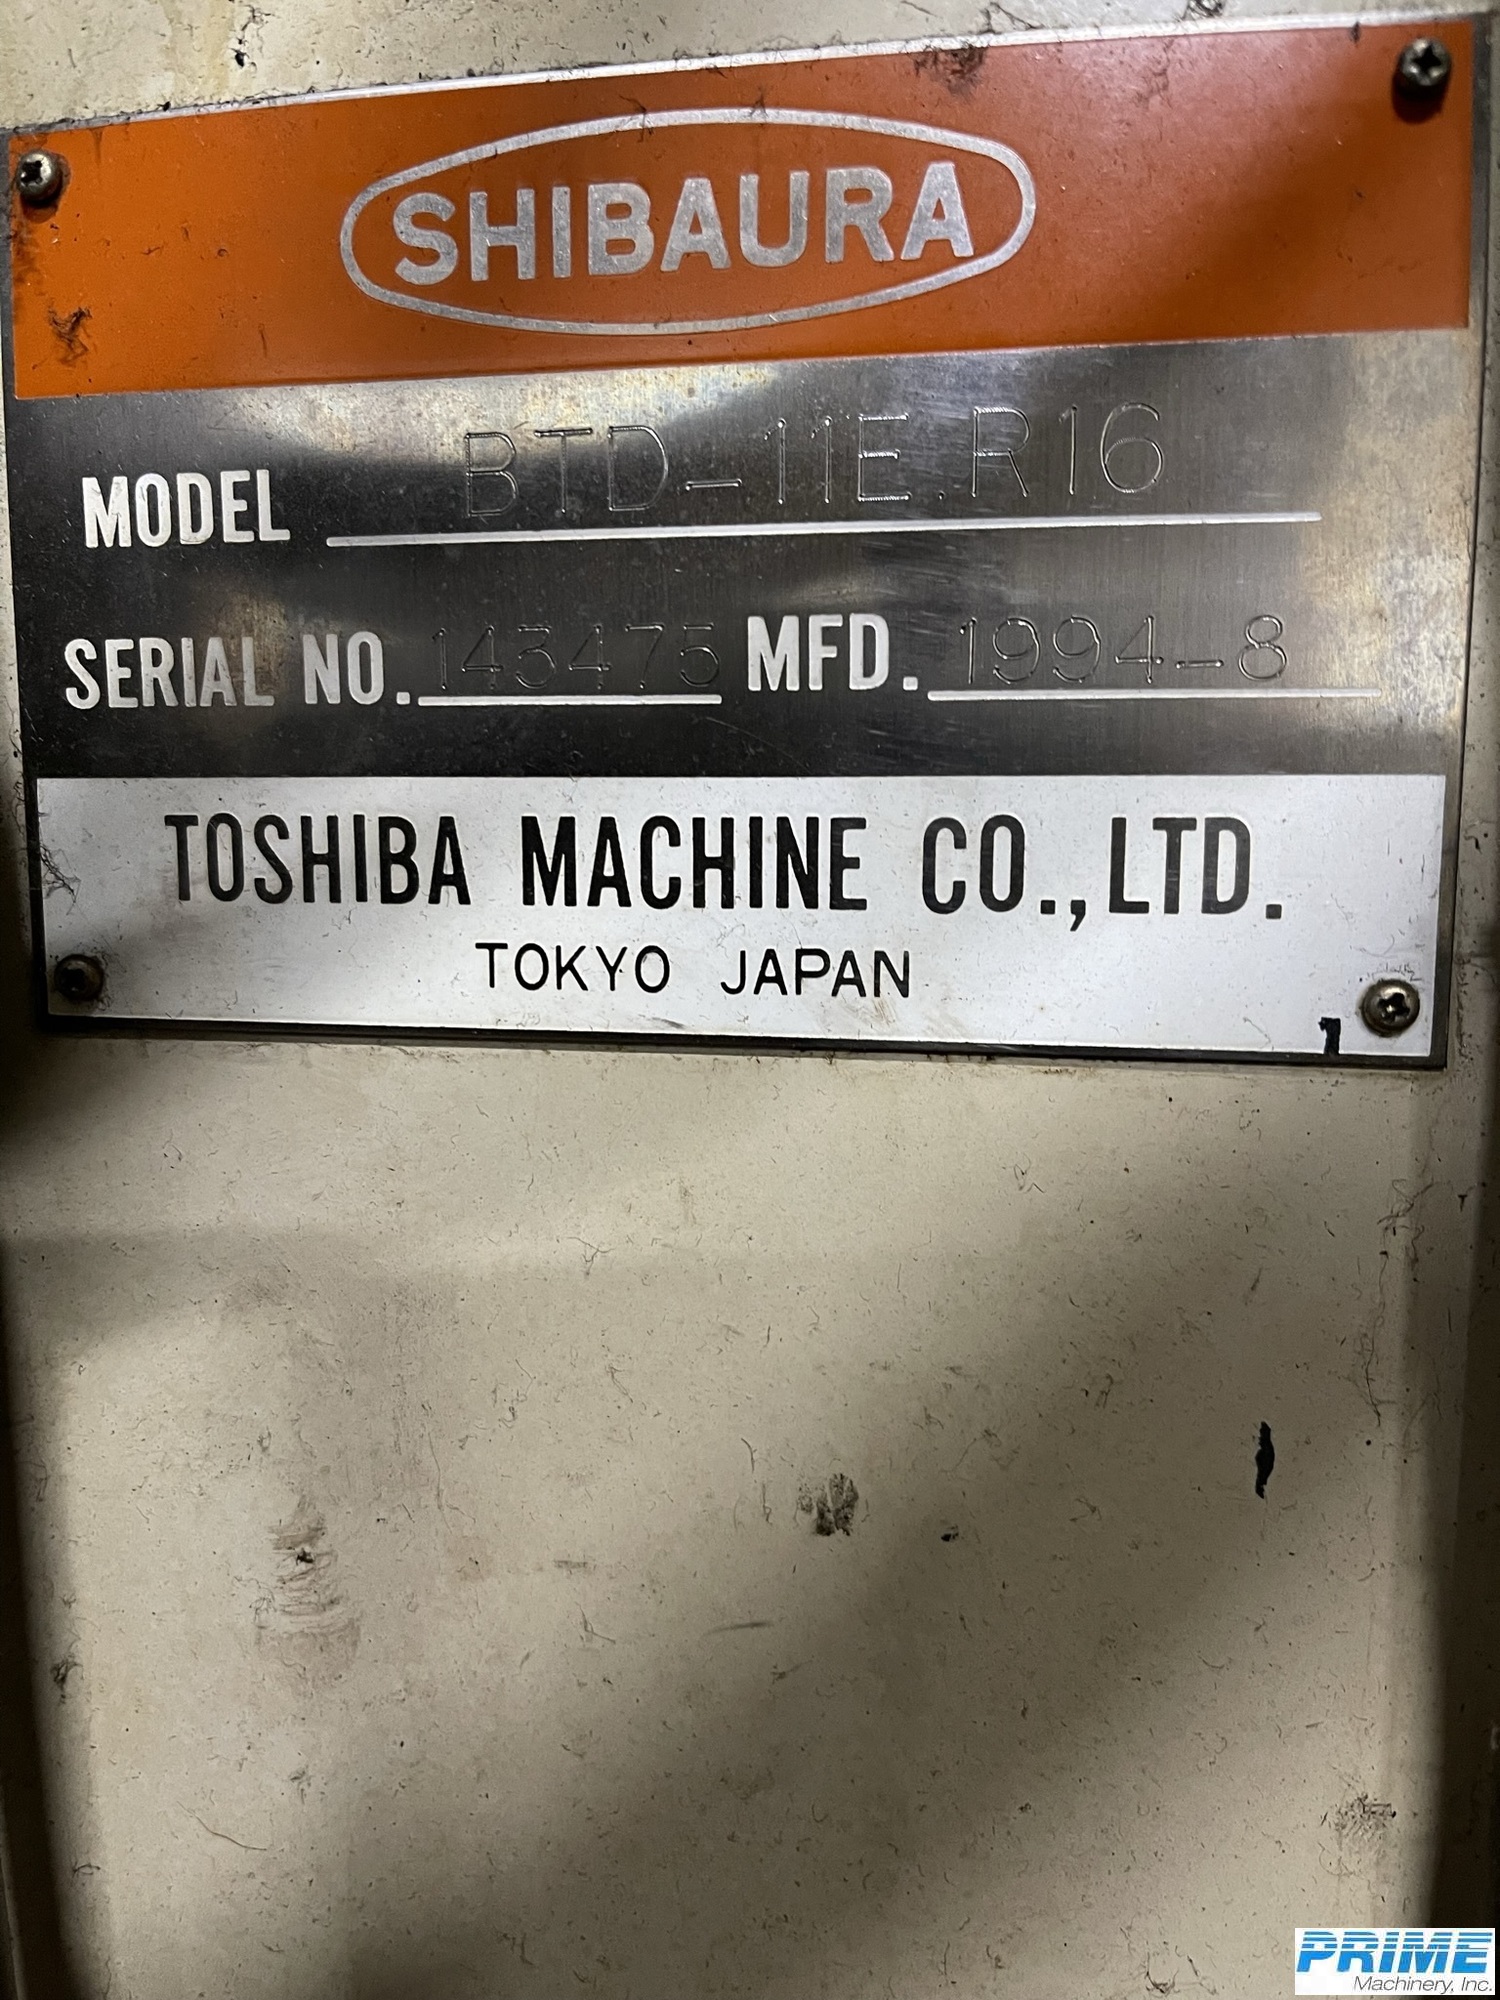 1994 TOSHIBA BTD-11E-R16 BORING MILLS, HORIZ., TABLE TYPE, N/C & CNC | Prime Machinery